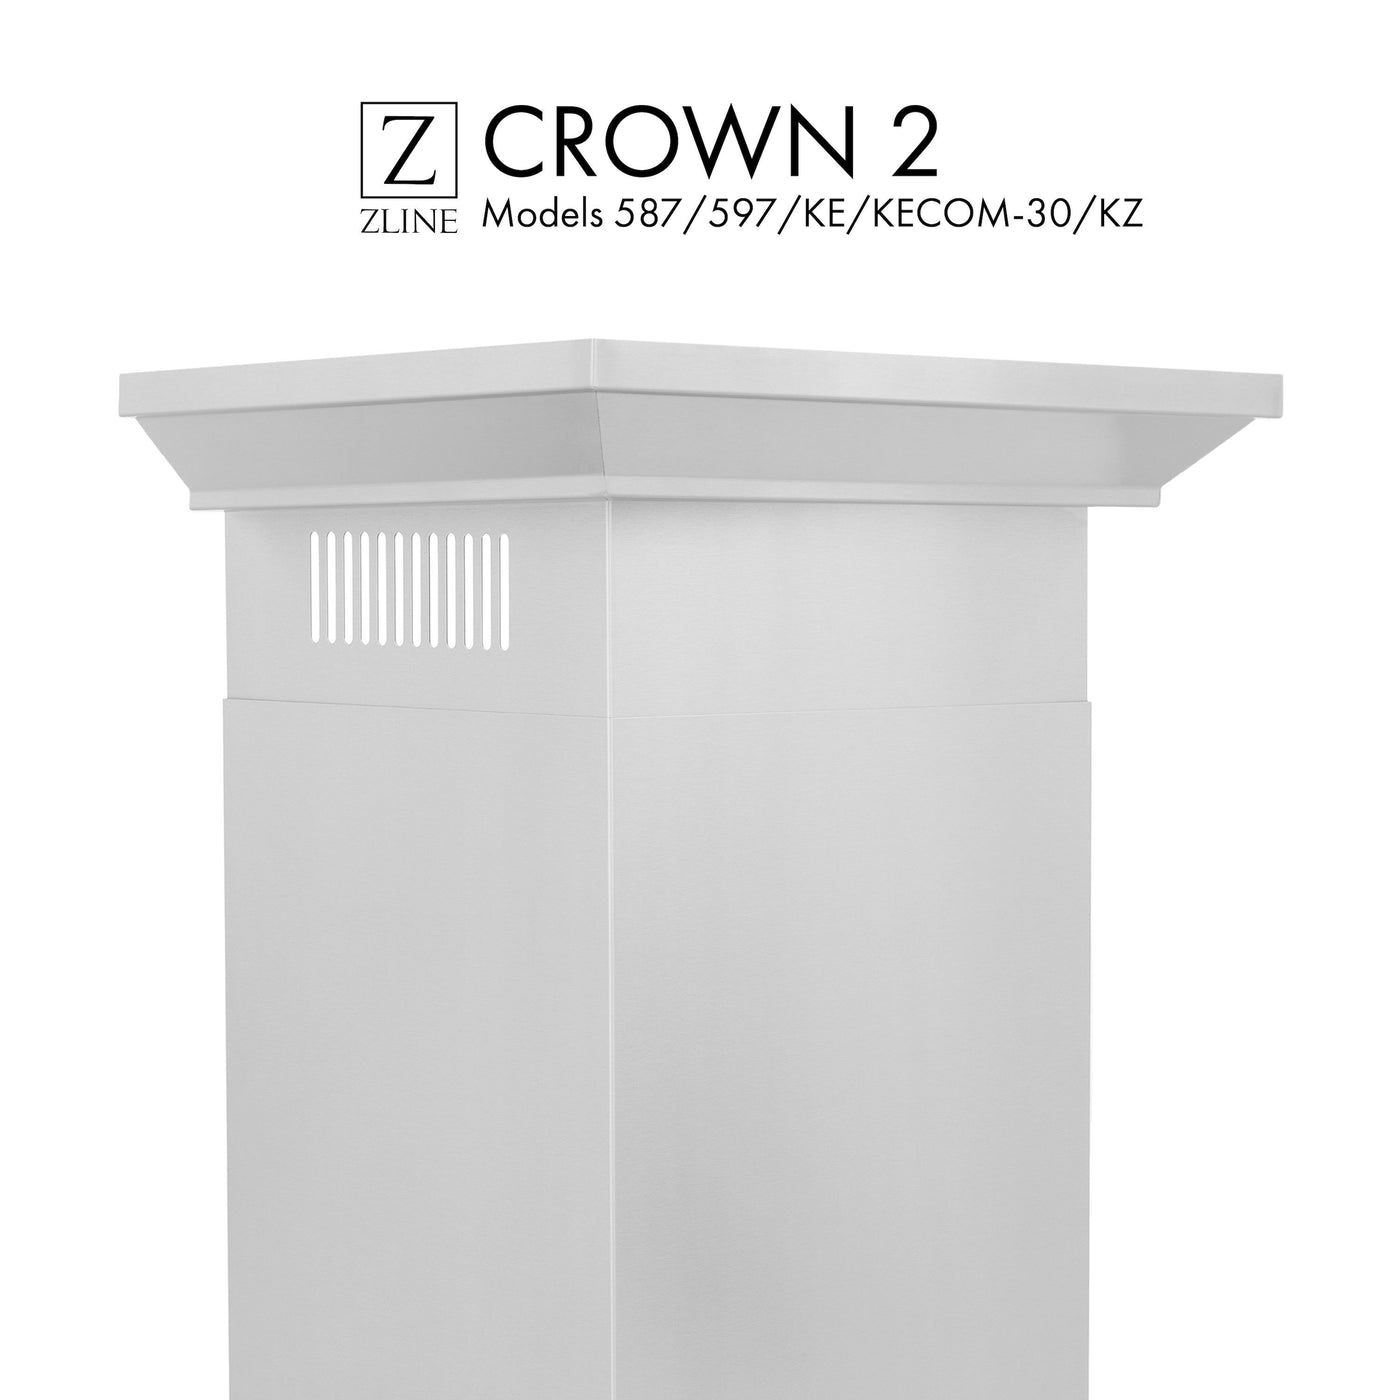 ZLINE Crown Molding #2 For Wall Range Hood (CM2-587/597/KE/KECOM-30/KZ)